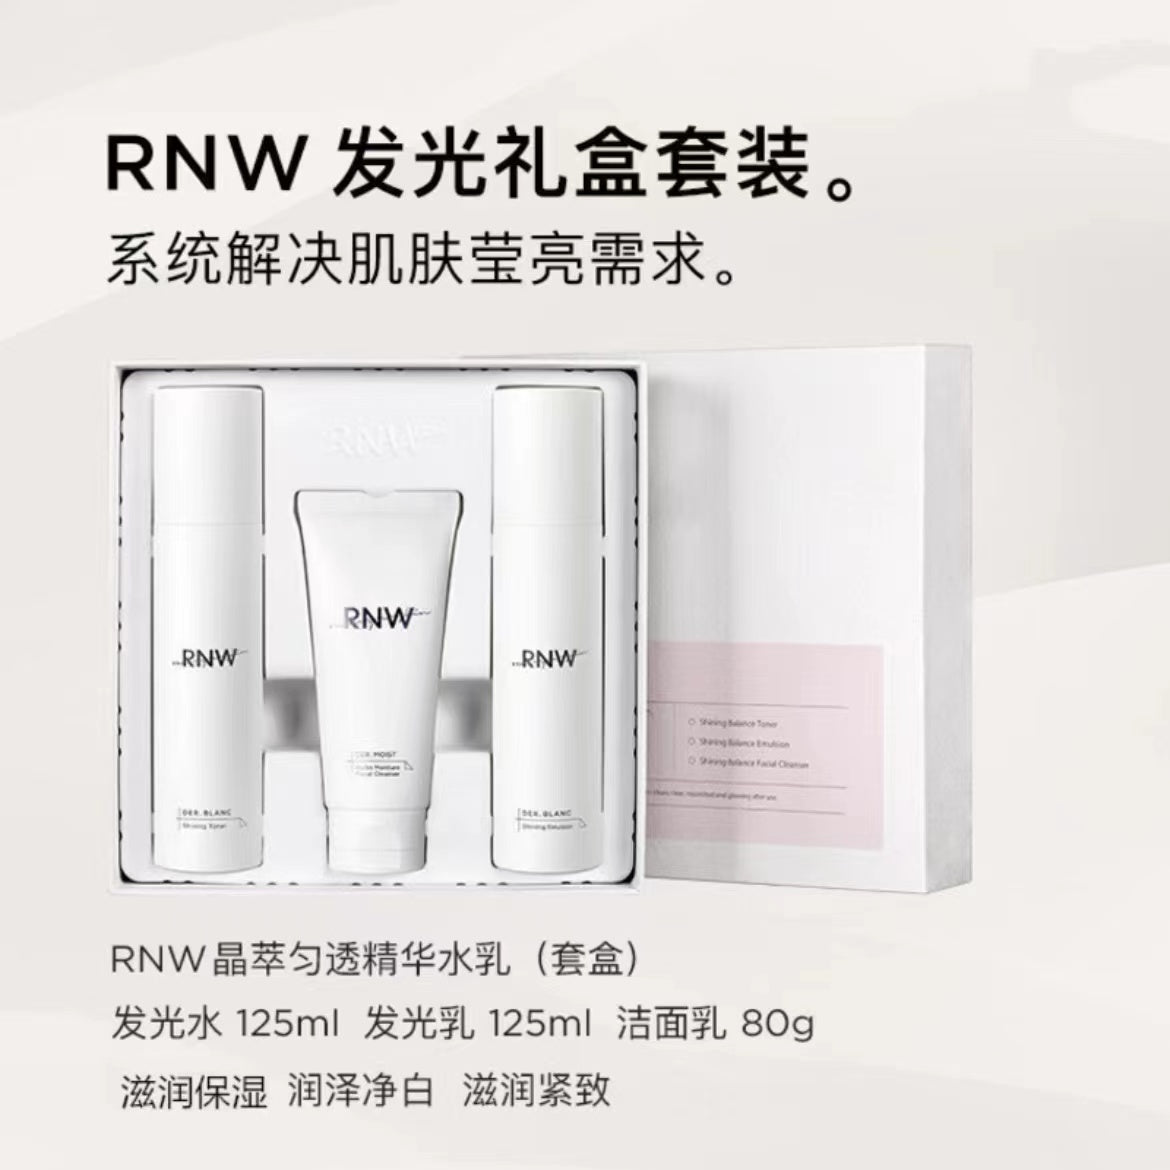 RNW Crystal Clear Cleanser Essence Toner Lotion Cosmetic Set 如薇晶萃匀透美白精华水乳套盒